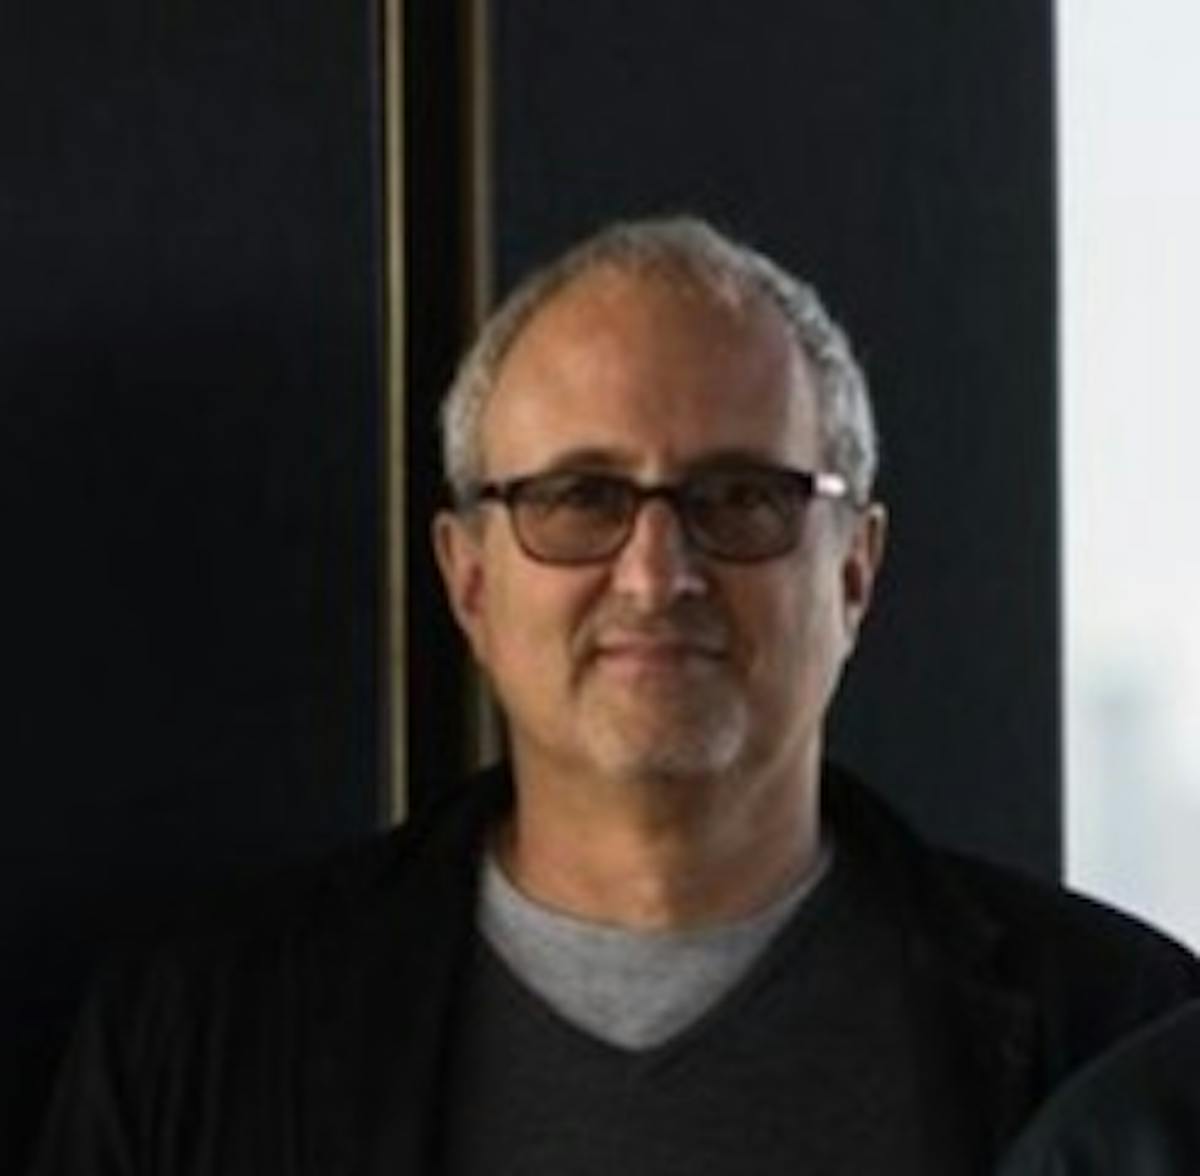 a man wearing glasses